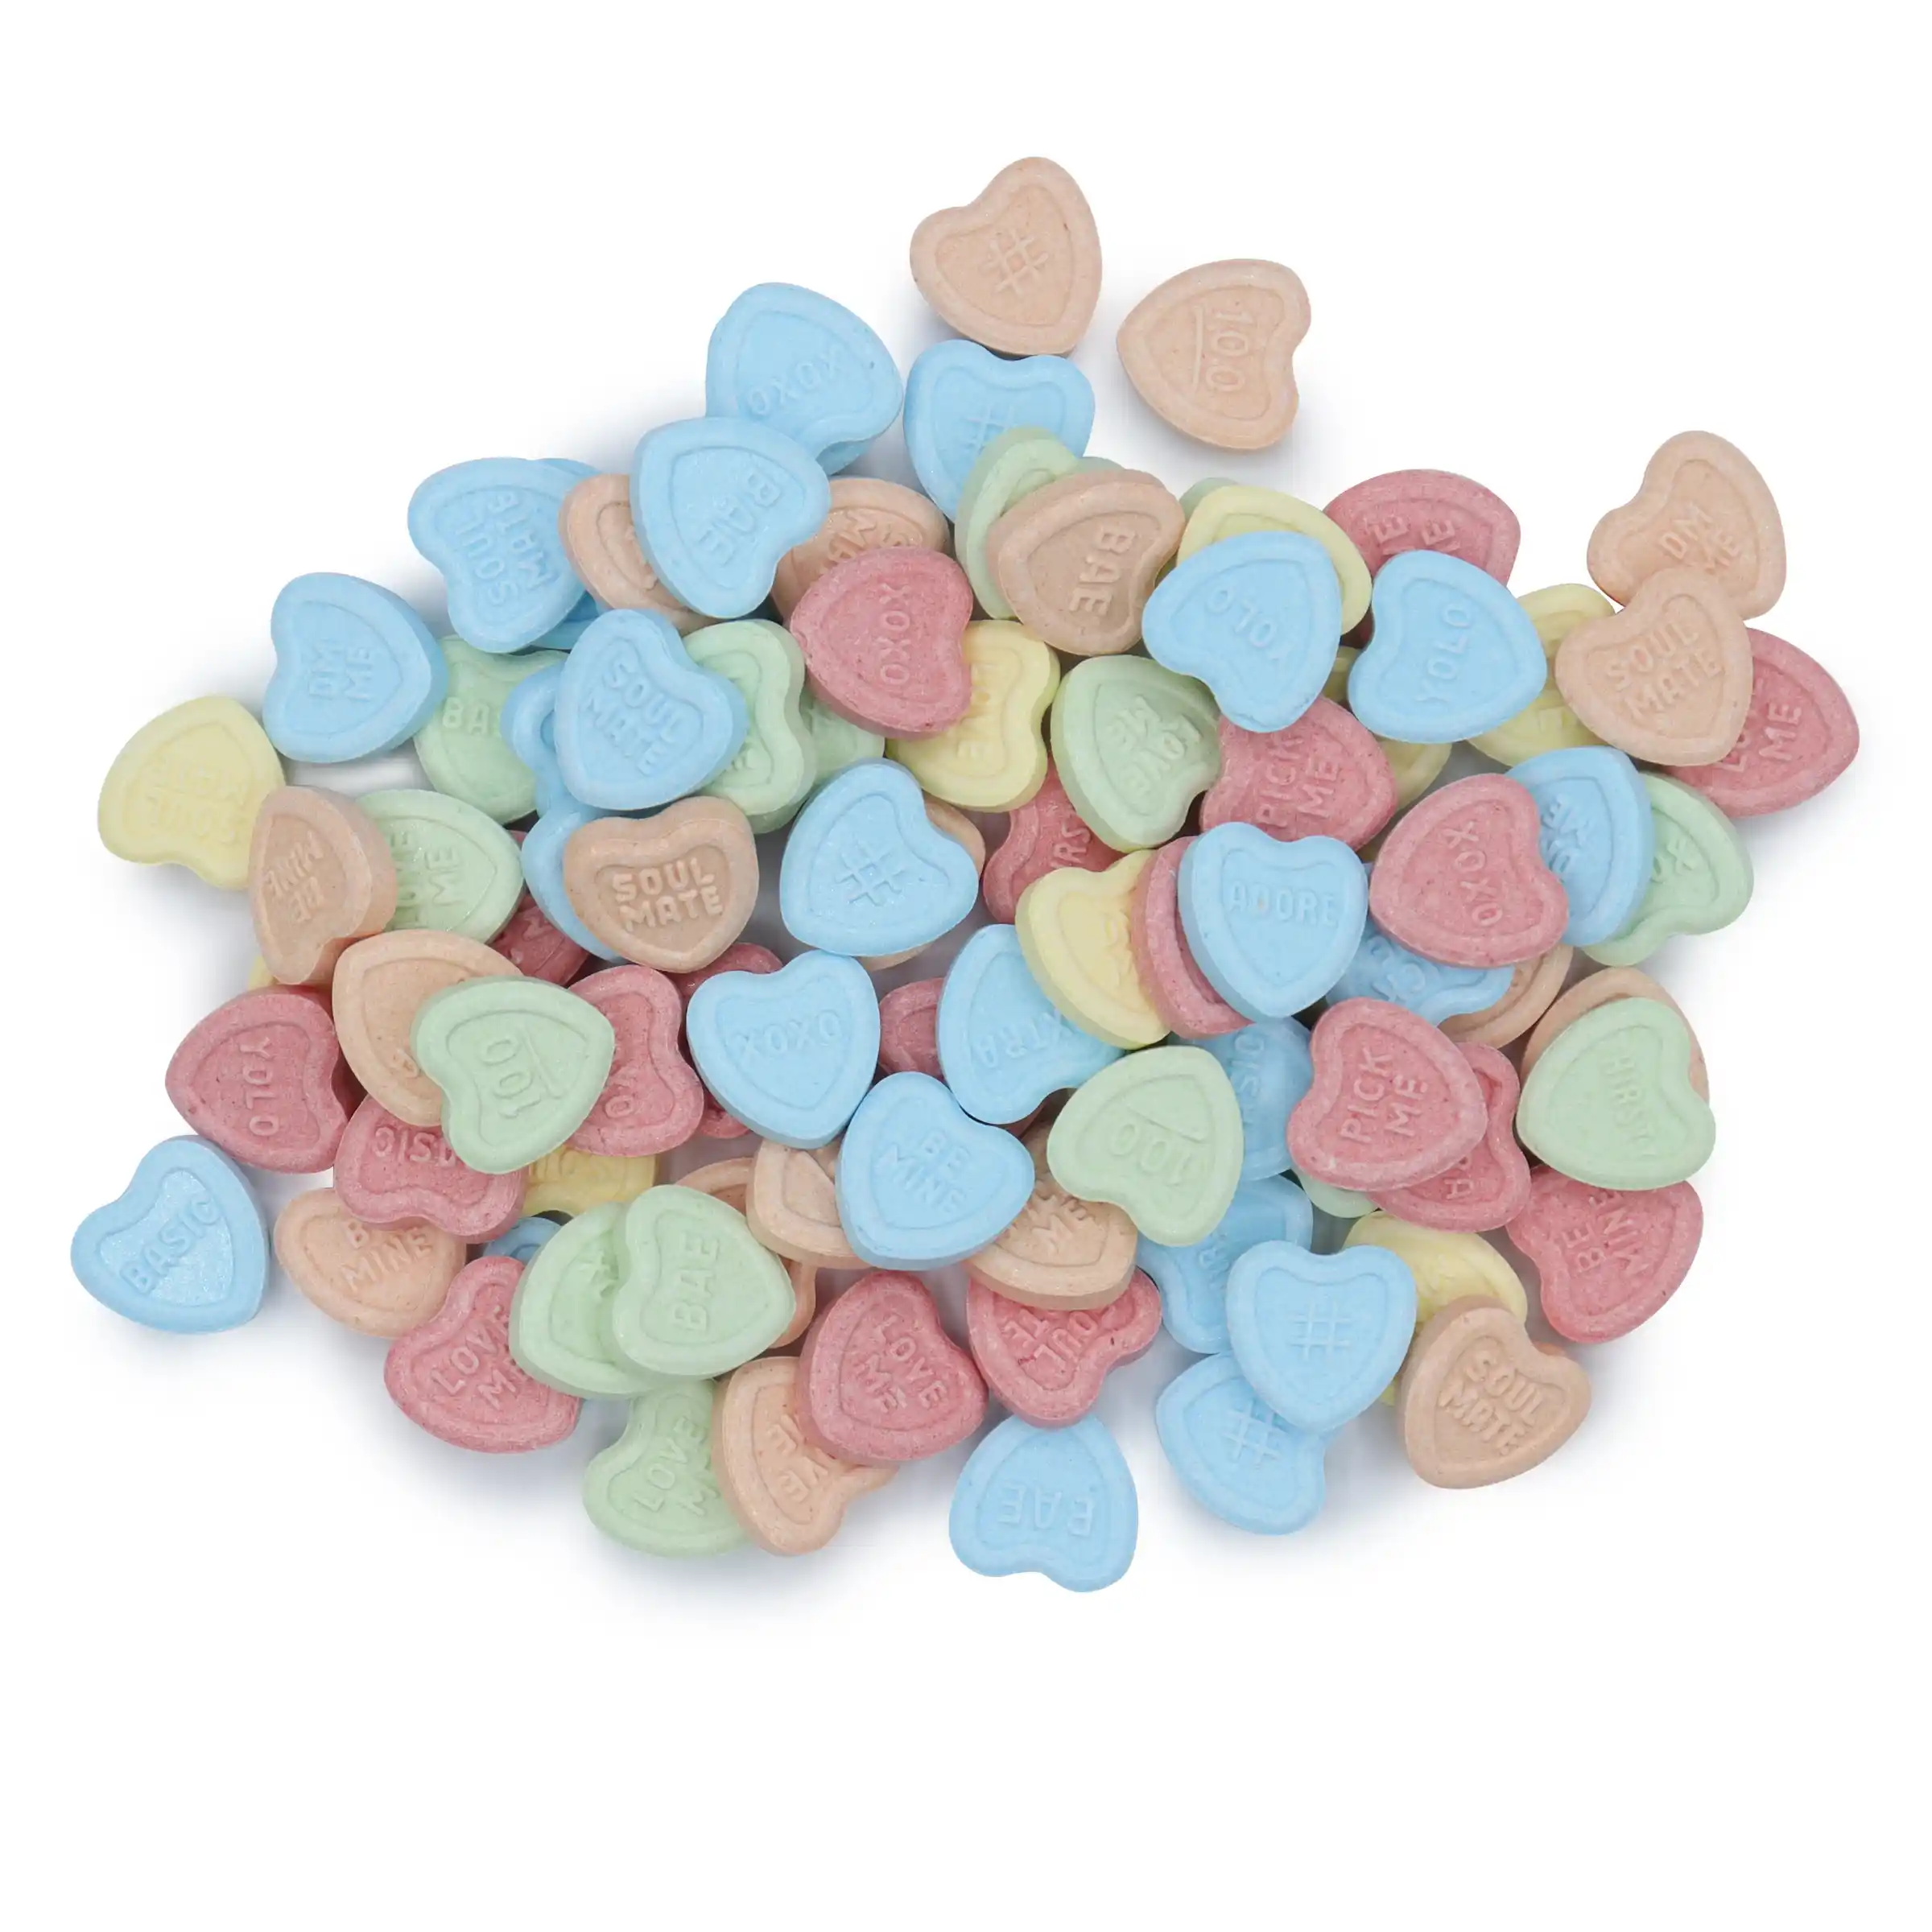 Brach's Large Conversation Hearts Candy: 16-Ounce Bag